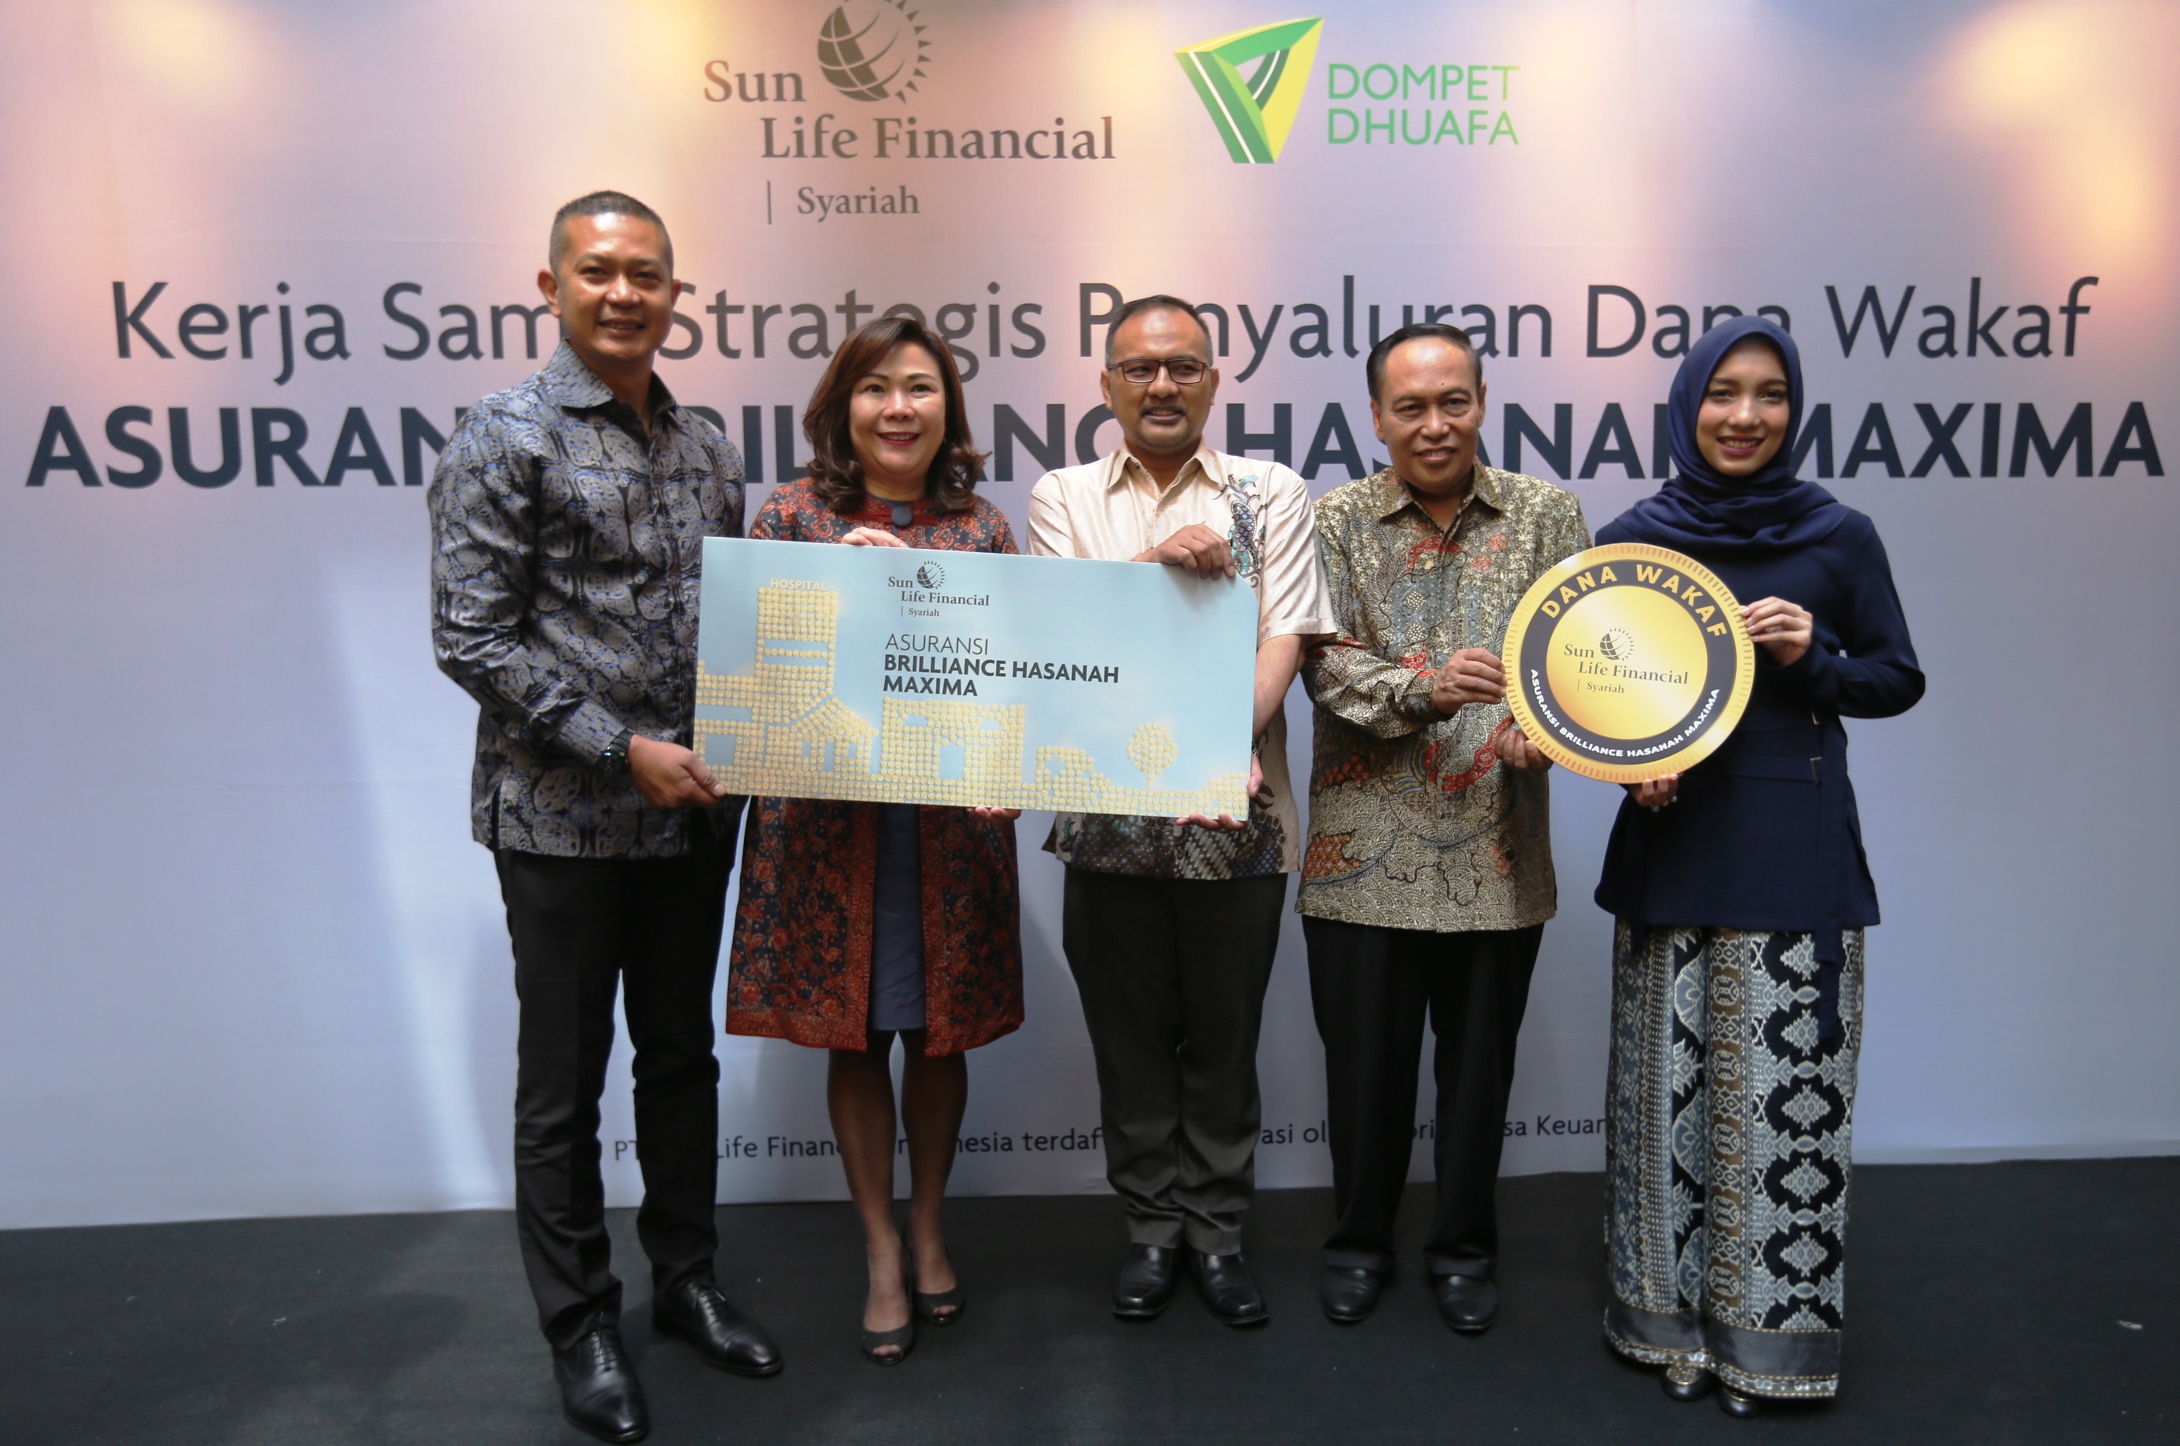 Fasilitasi Penyaluran Wakaf Sun Life Financial Indonesia Hadirkan Nilai Ibadah Pada Produk Asuransi Brilliance Hasanah Maxima 2018 Sun Life Indonesia